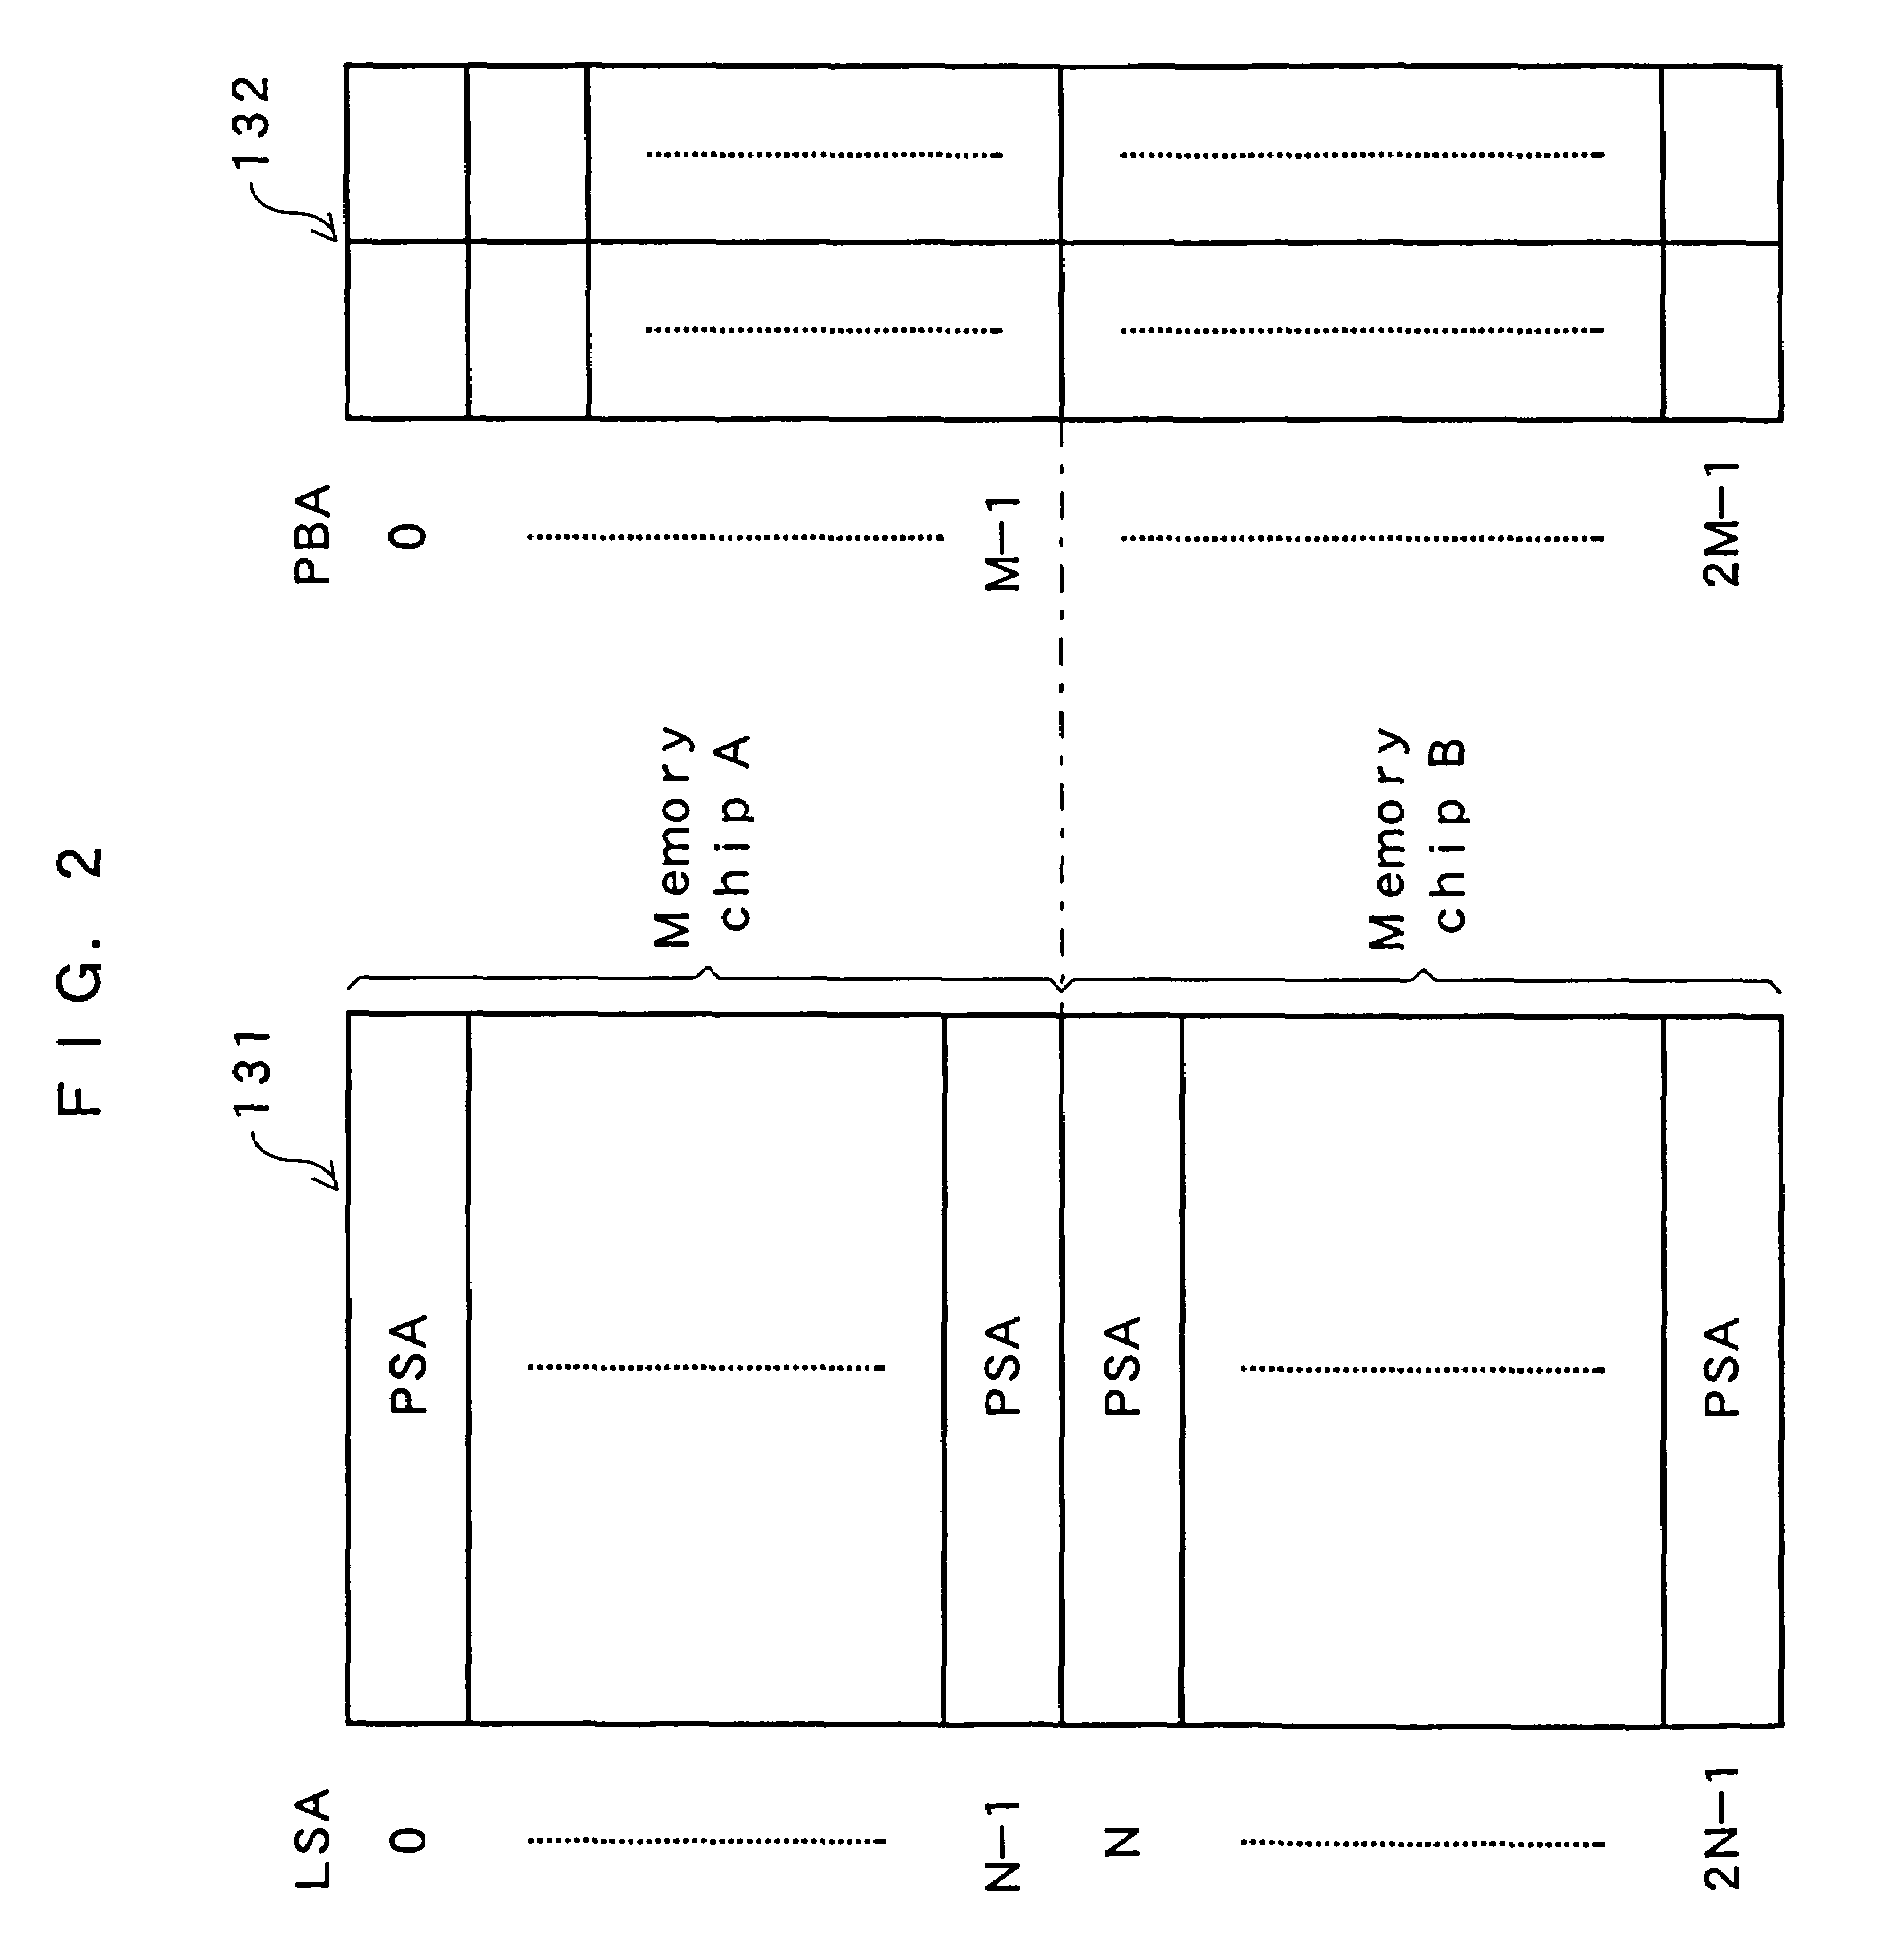 Semiconductor memory card, semiconductor memory control apparatus, and semiconductor memory control method